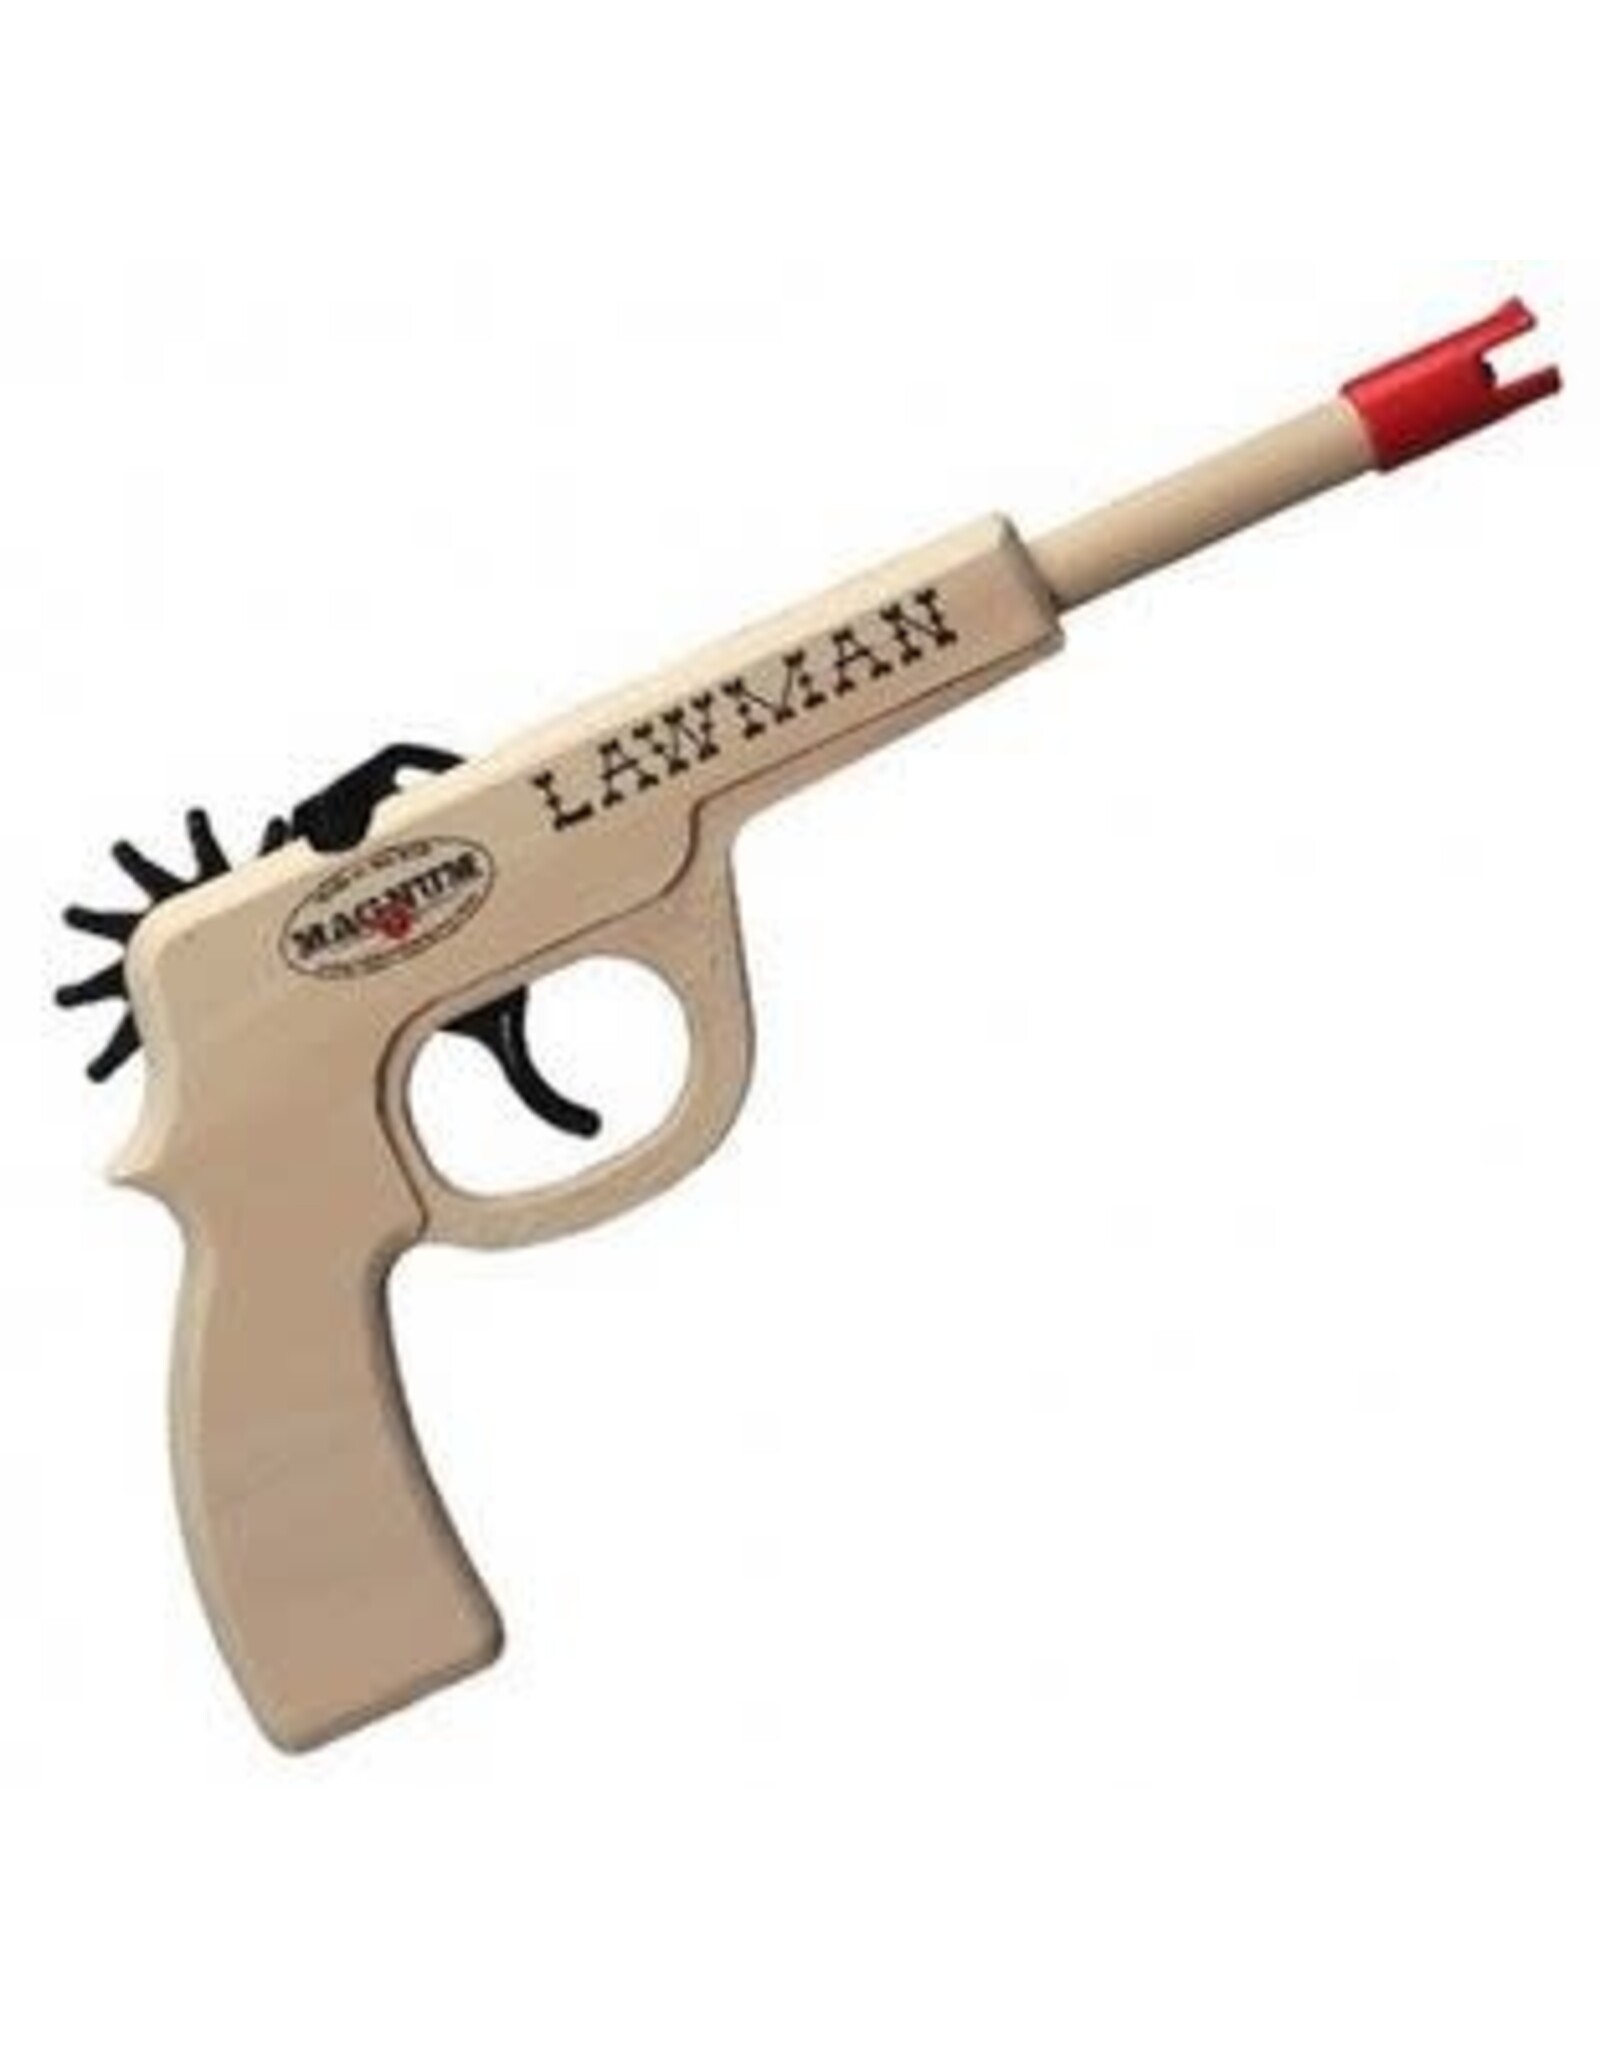 Magnum 12 Lawman Pistol Rubberband Gun